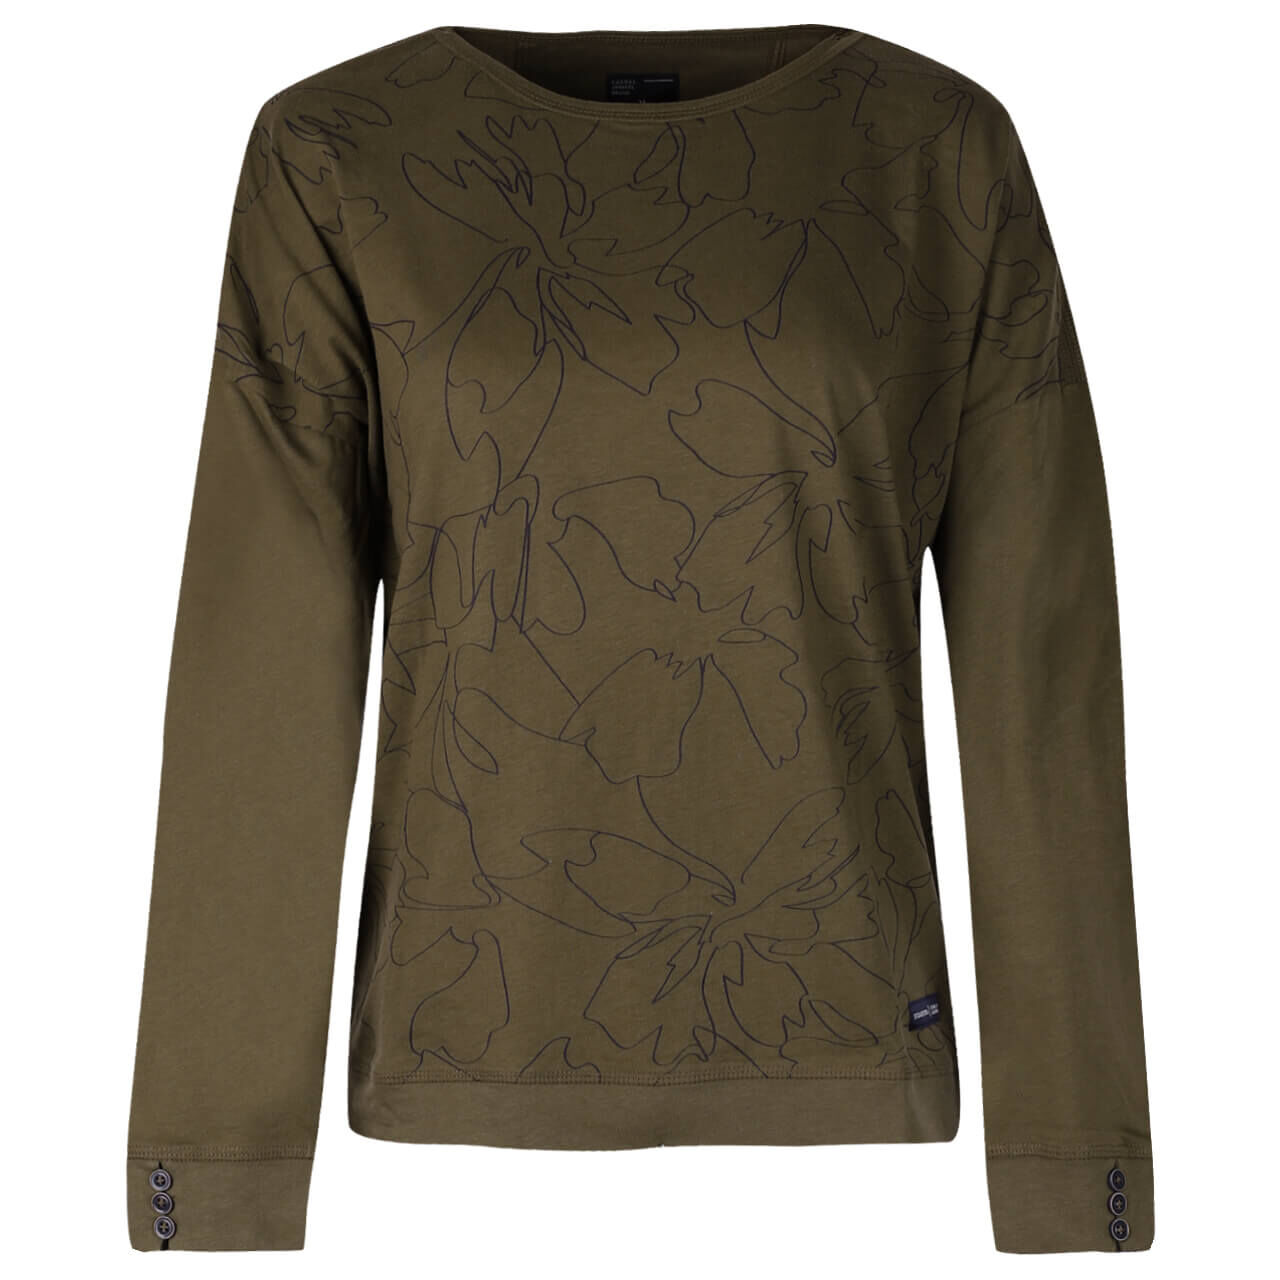 Soquesto Damen Langarm Shirt dark moss printed